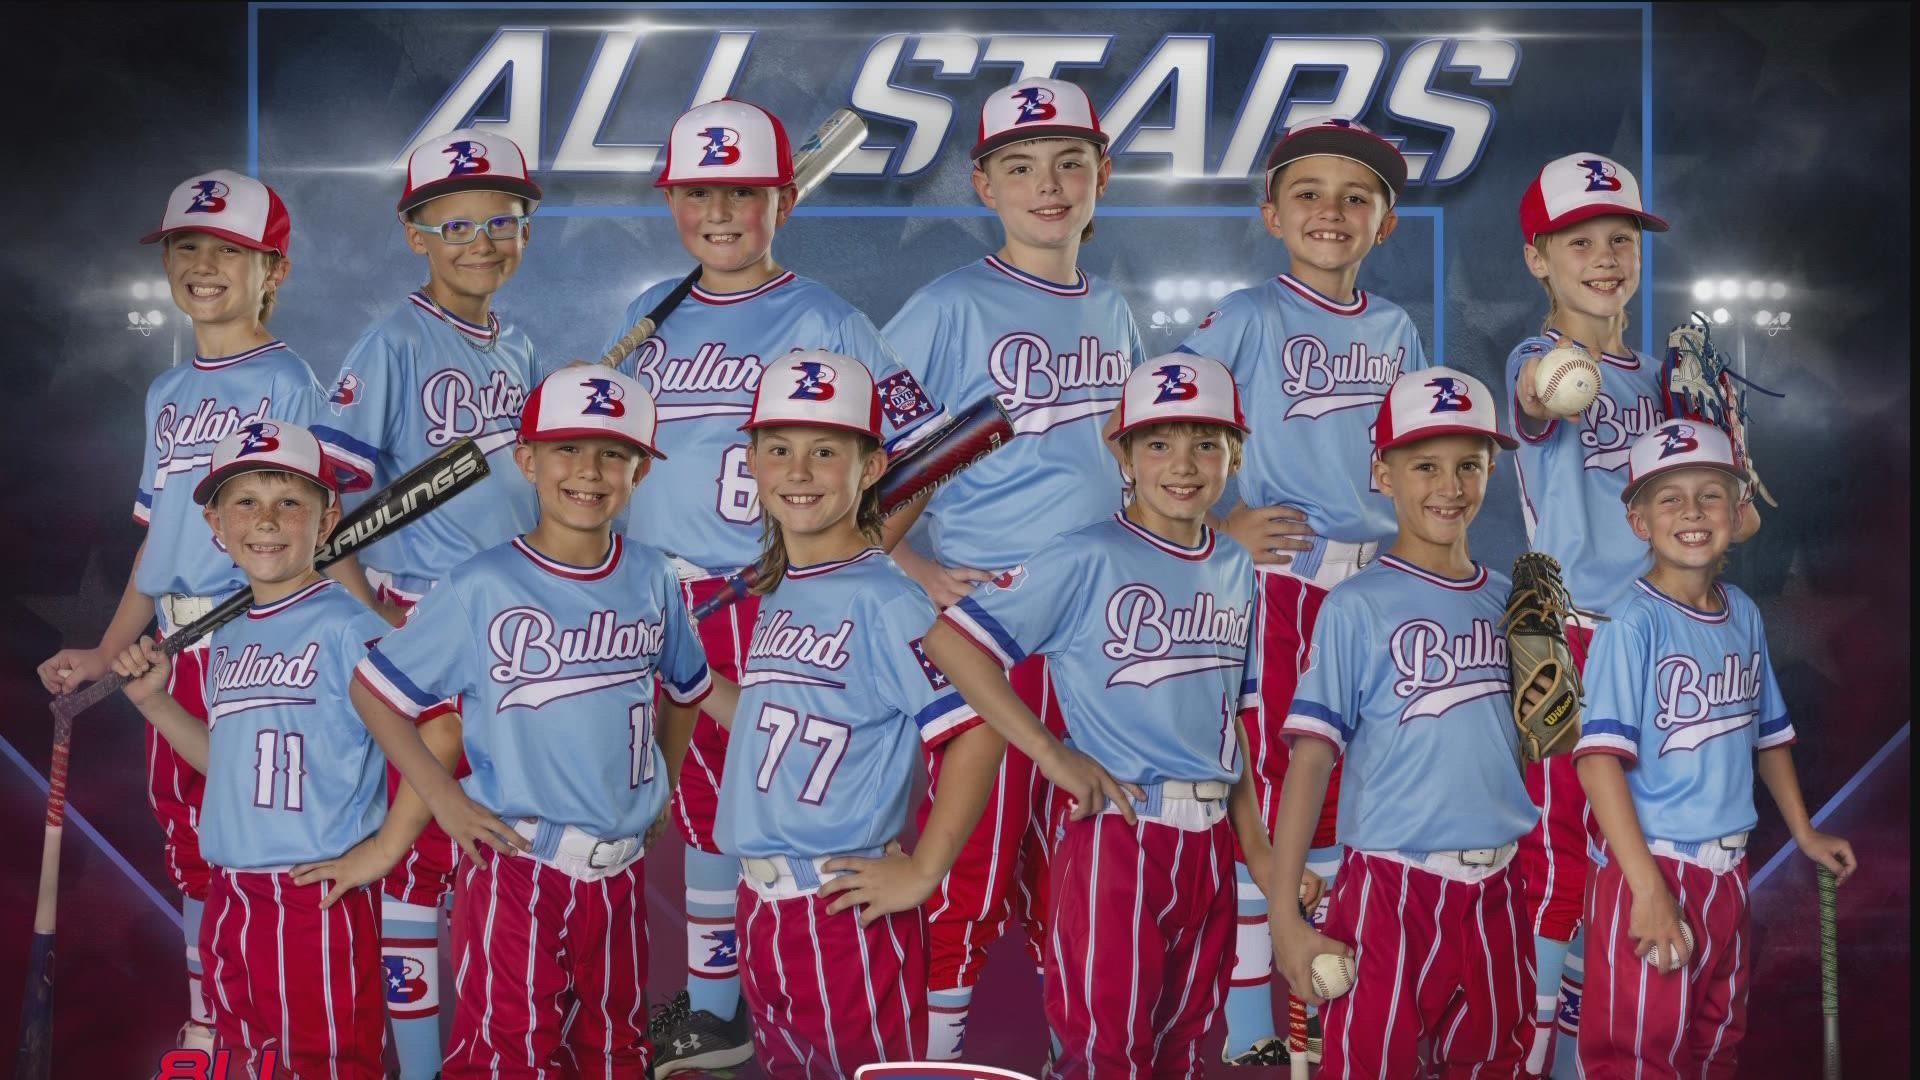 Bullard baseball team is raising money for the Youth World Series